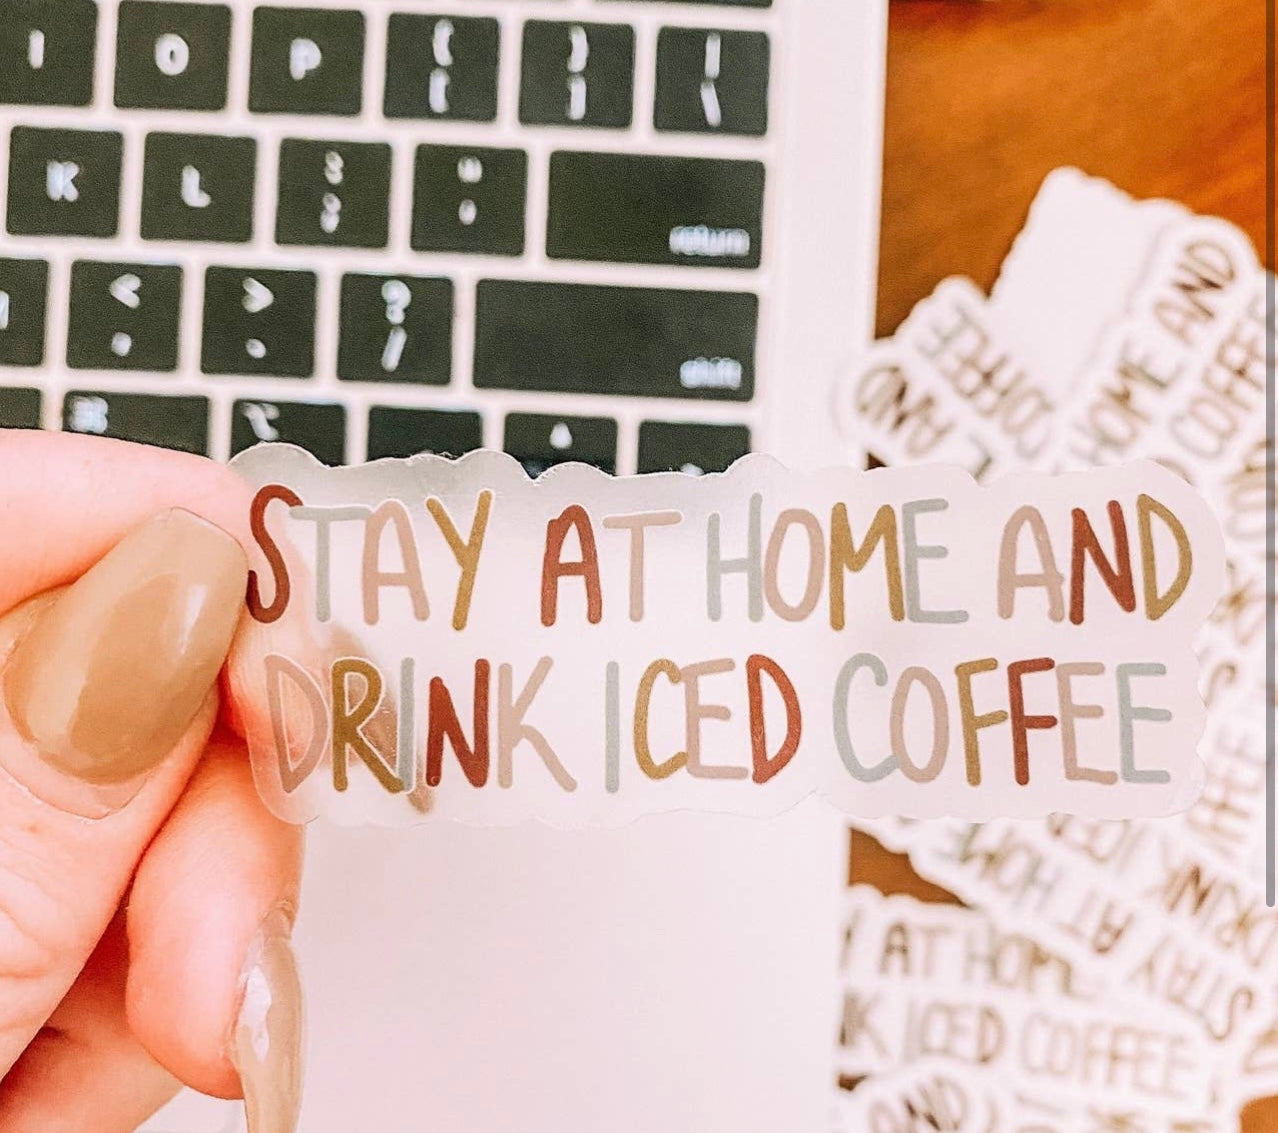 Clear Drink Iced Coffee Sticker